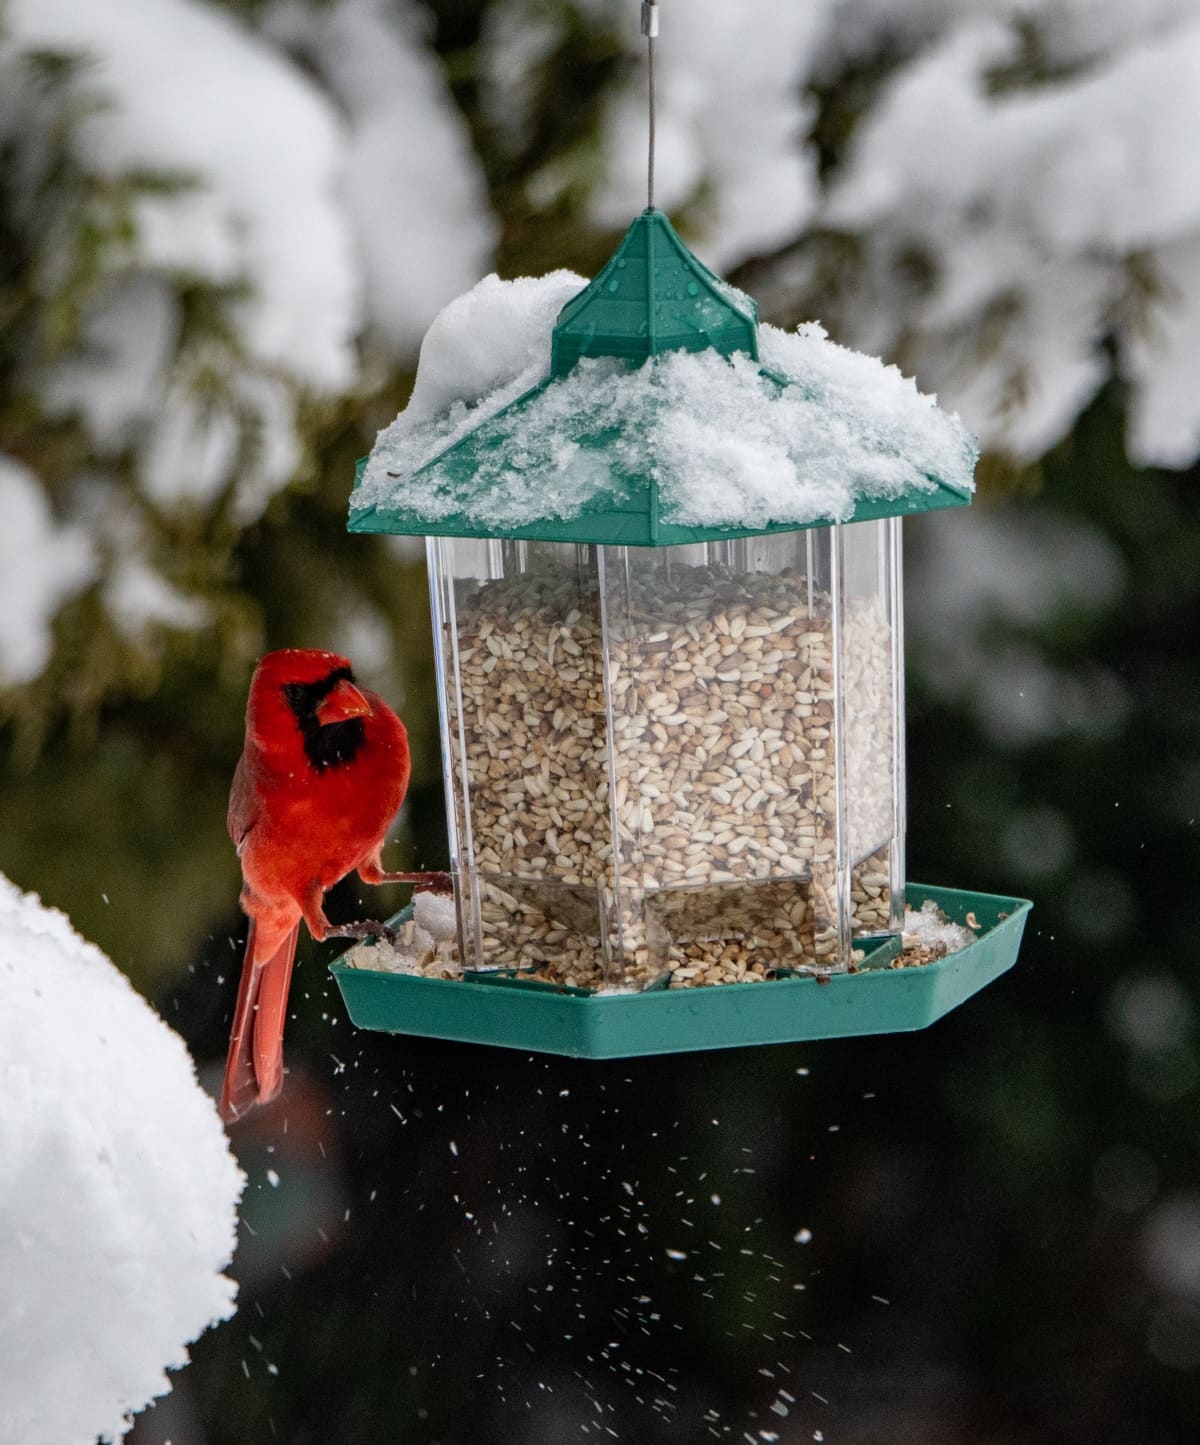 A male red cardinal bird just lands on a backyard bird feeder. Snow falls from the feeder full of seeds.